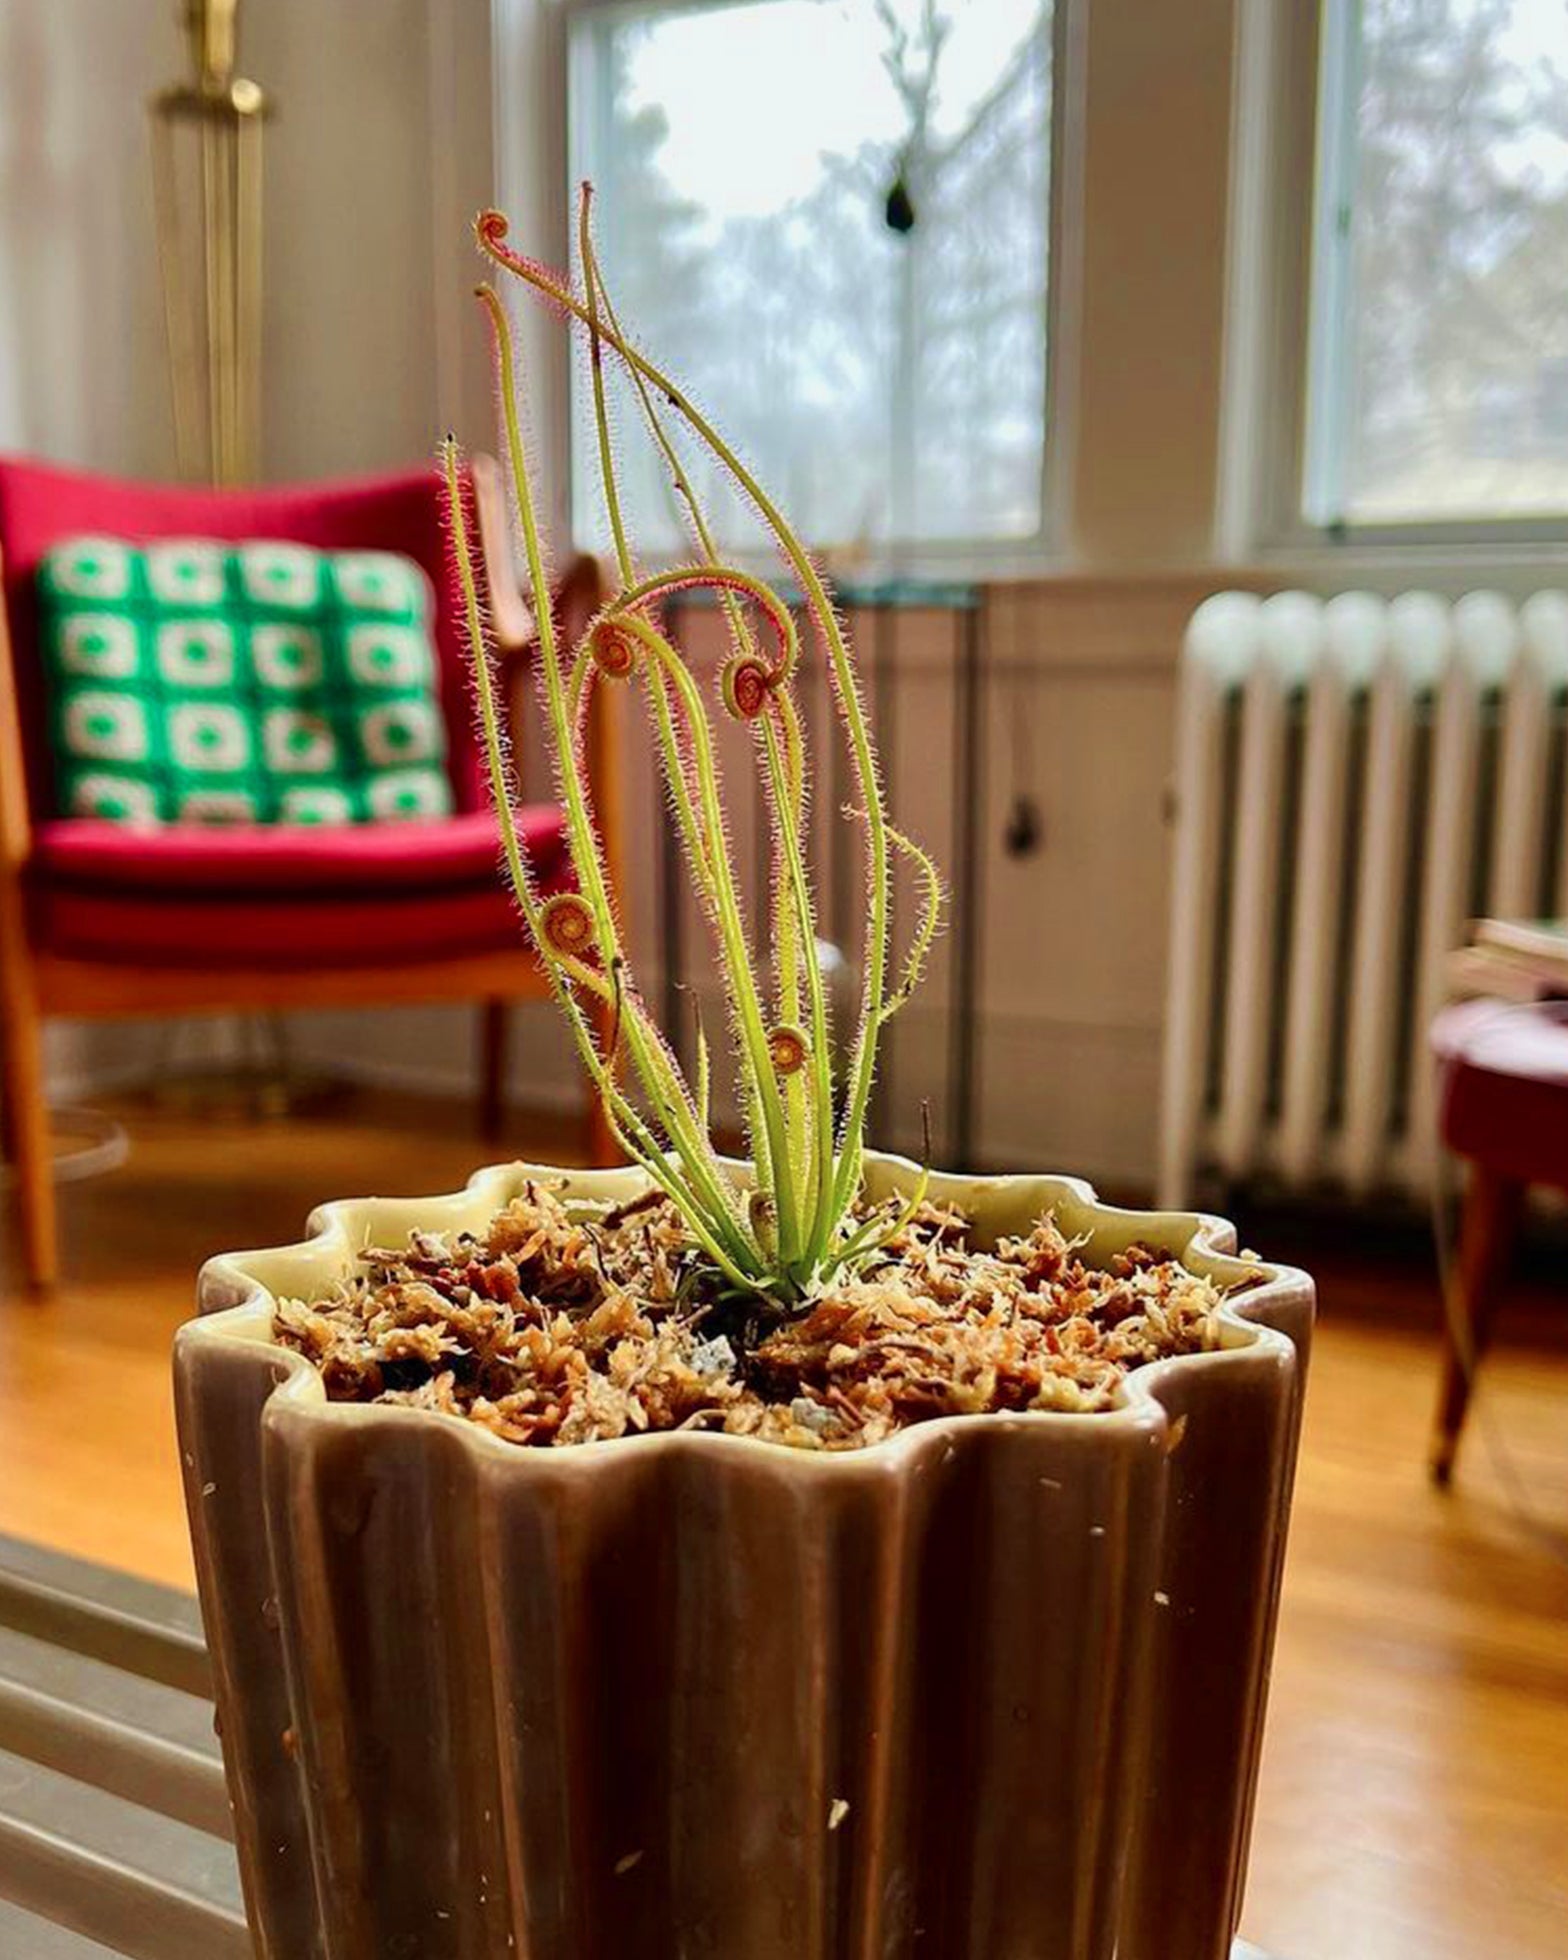 Sundew- Drosera Filiformis - Perfect Plants